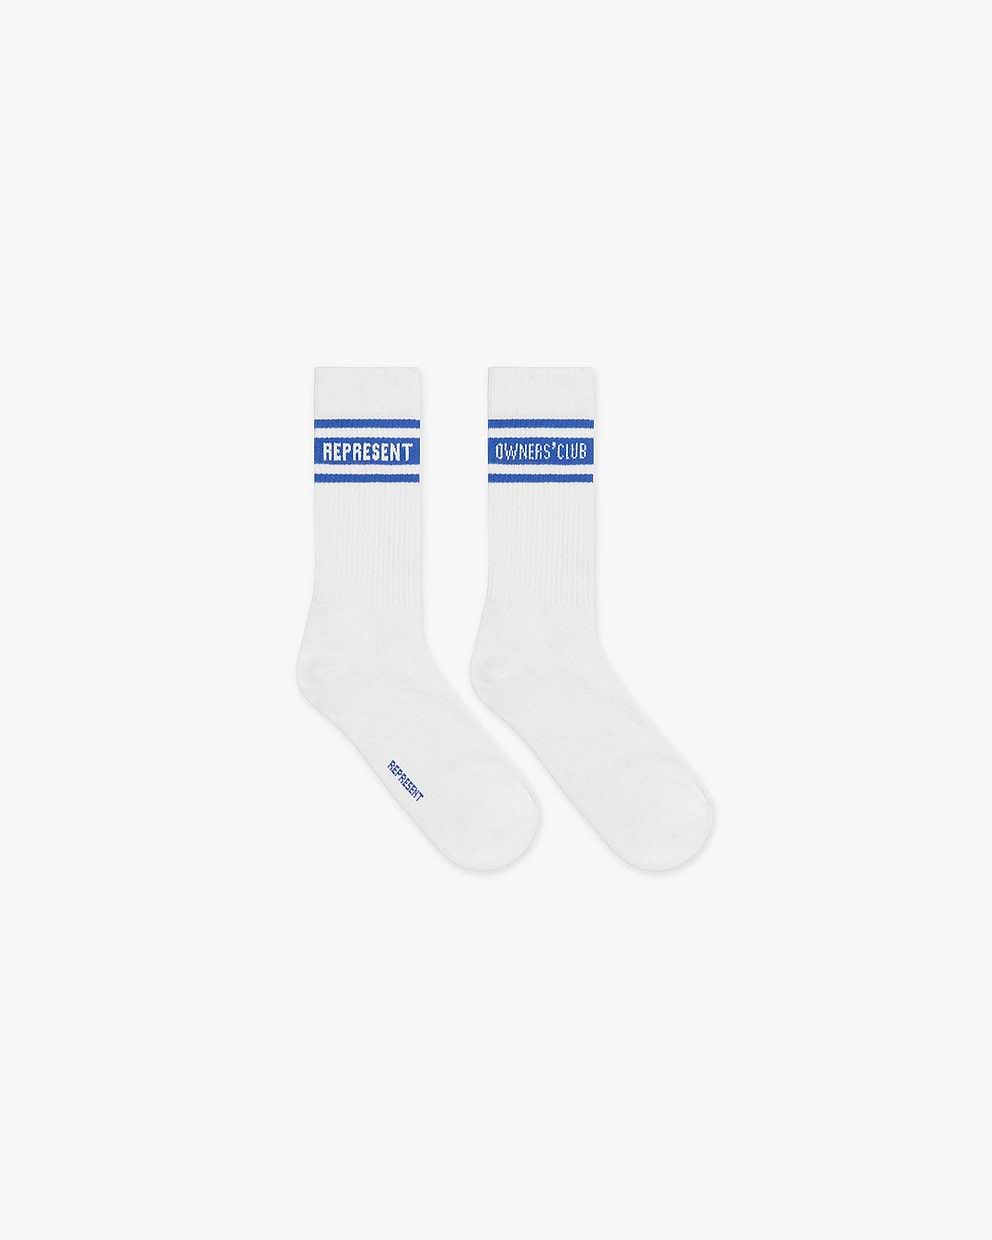 Represent Owners Club Socks - Flat White/Cobalt